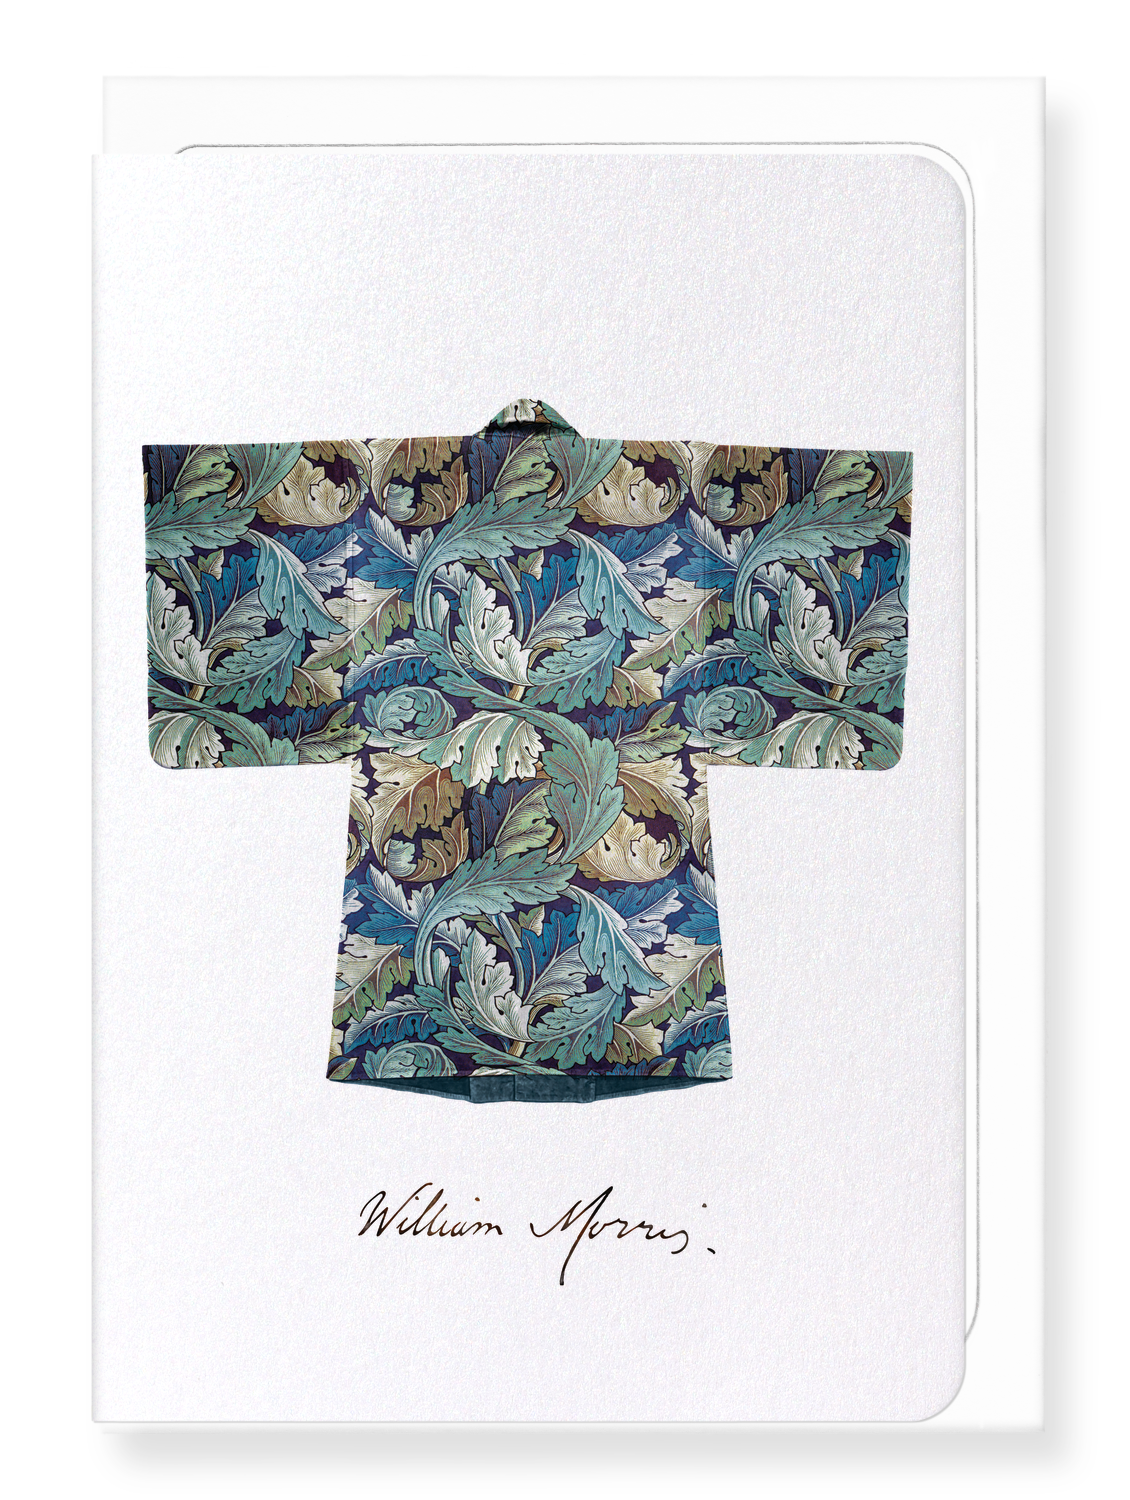 Ezen Designs - Acanthus Grapes Kimono - Greeting Card - Front